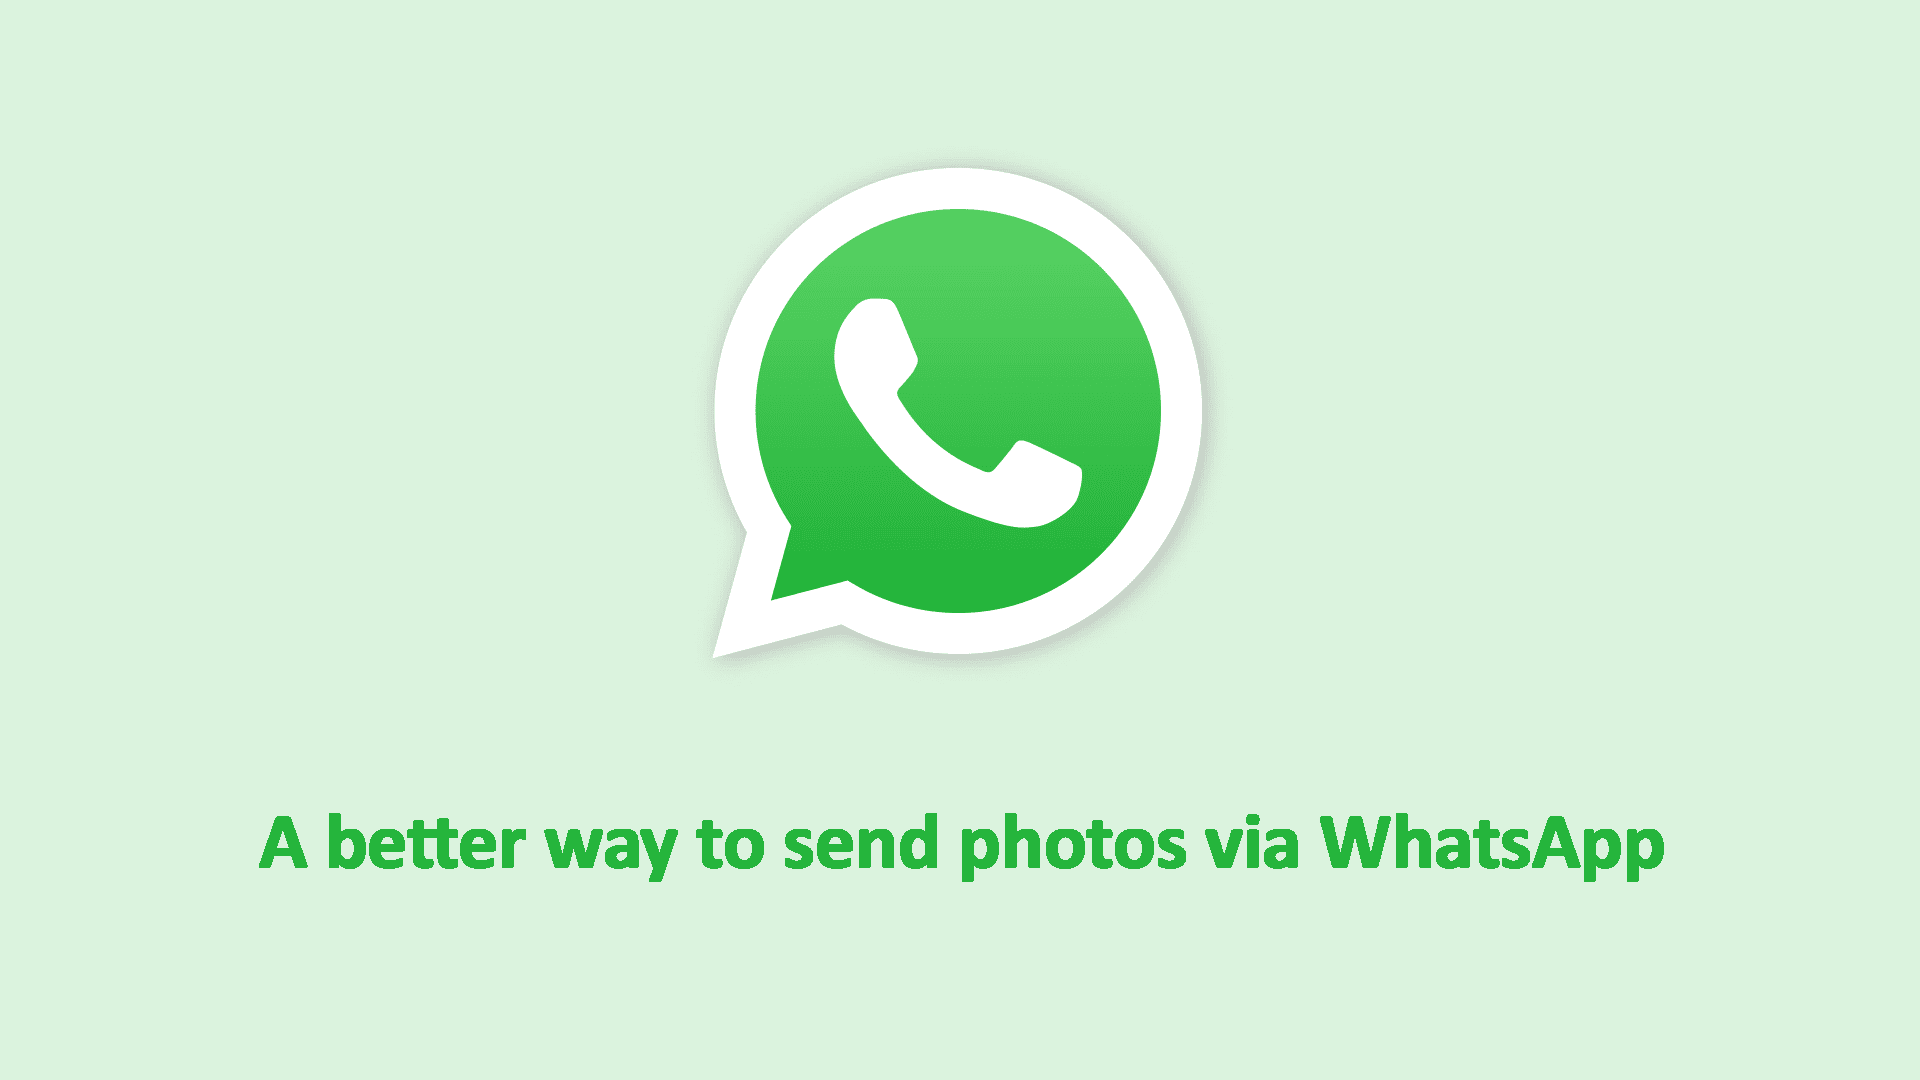 A better way to send photos via WhatsApp